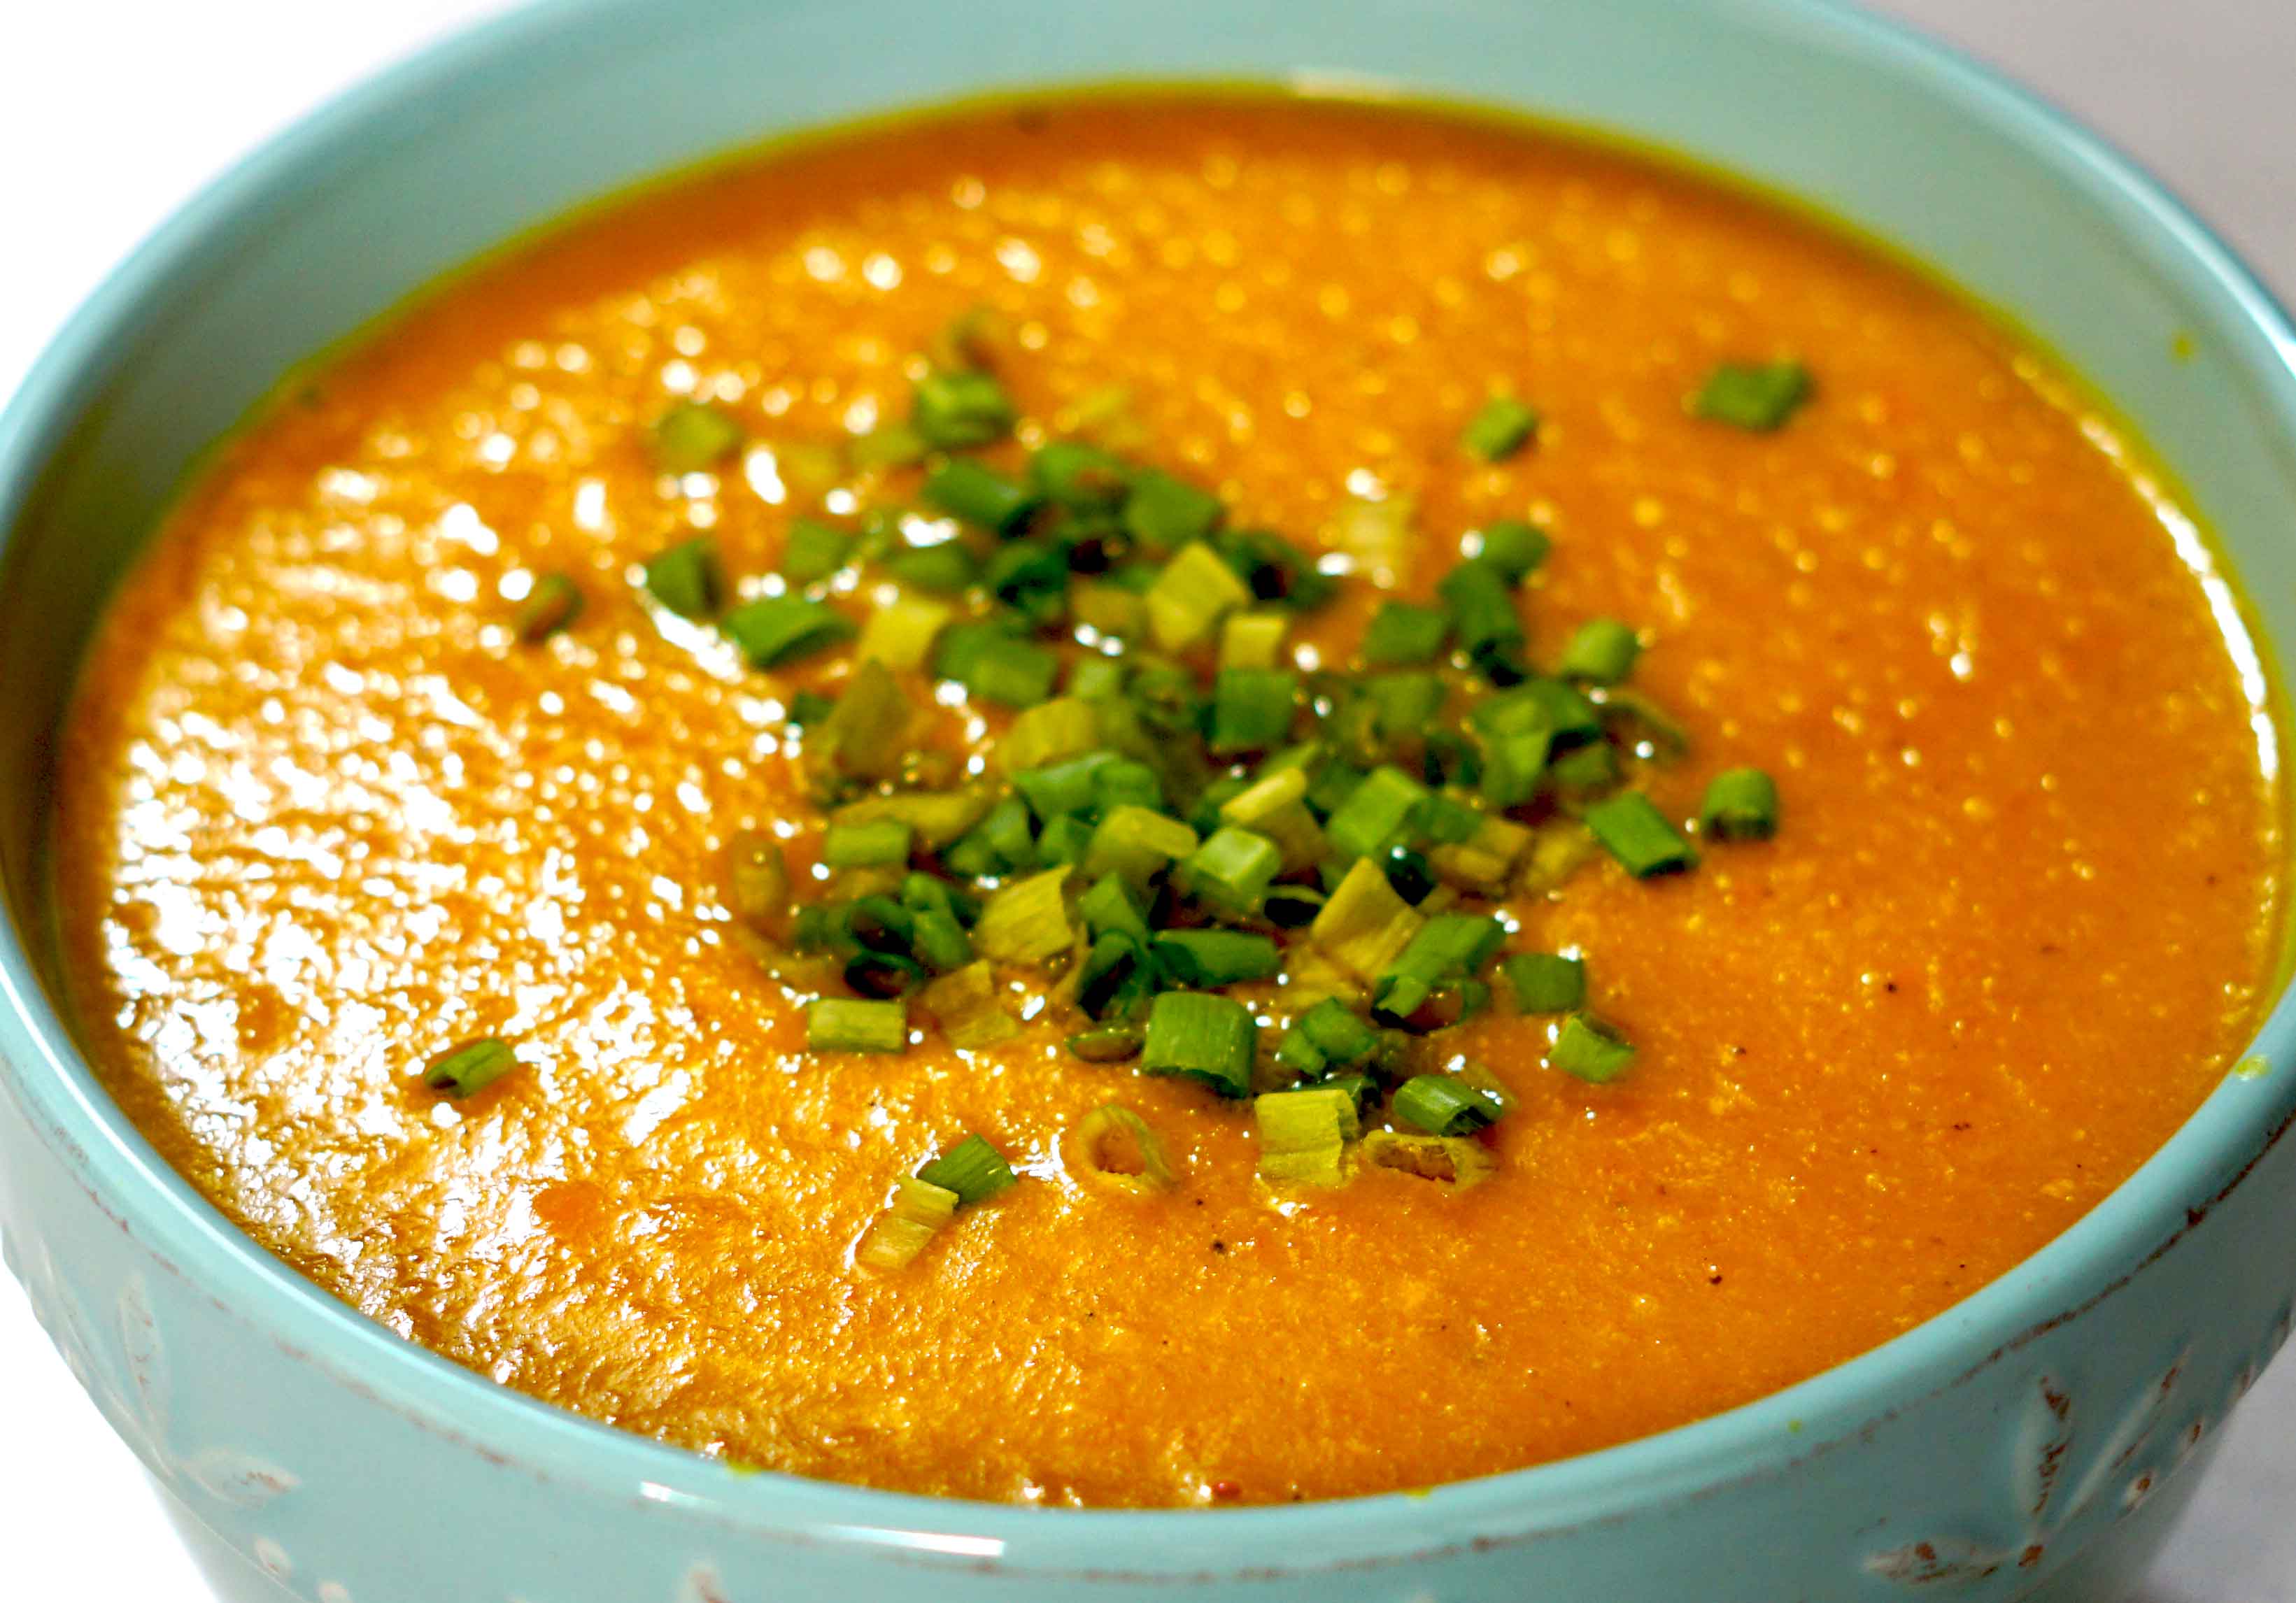 EatAhFood - Roasted Carrot Soup